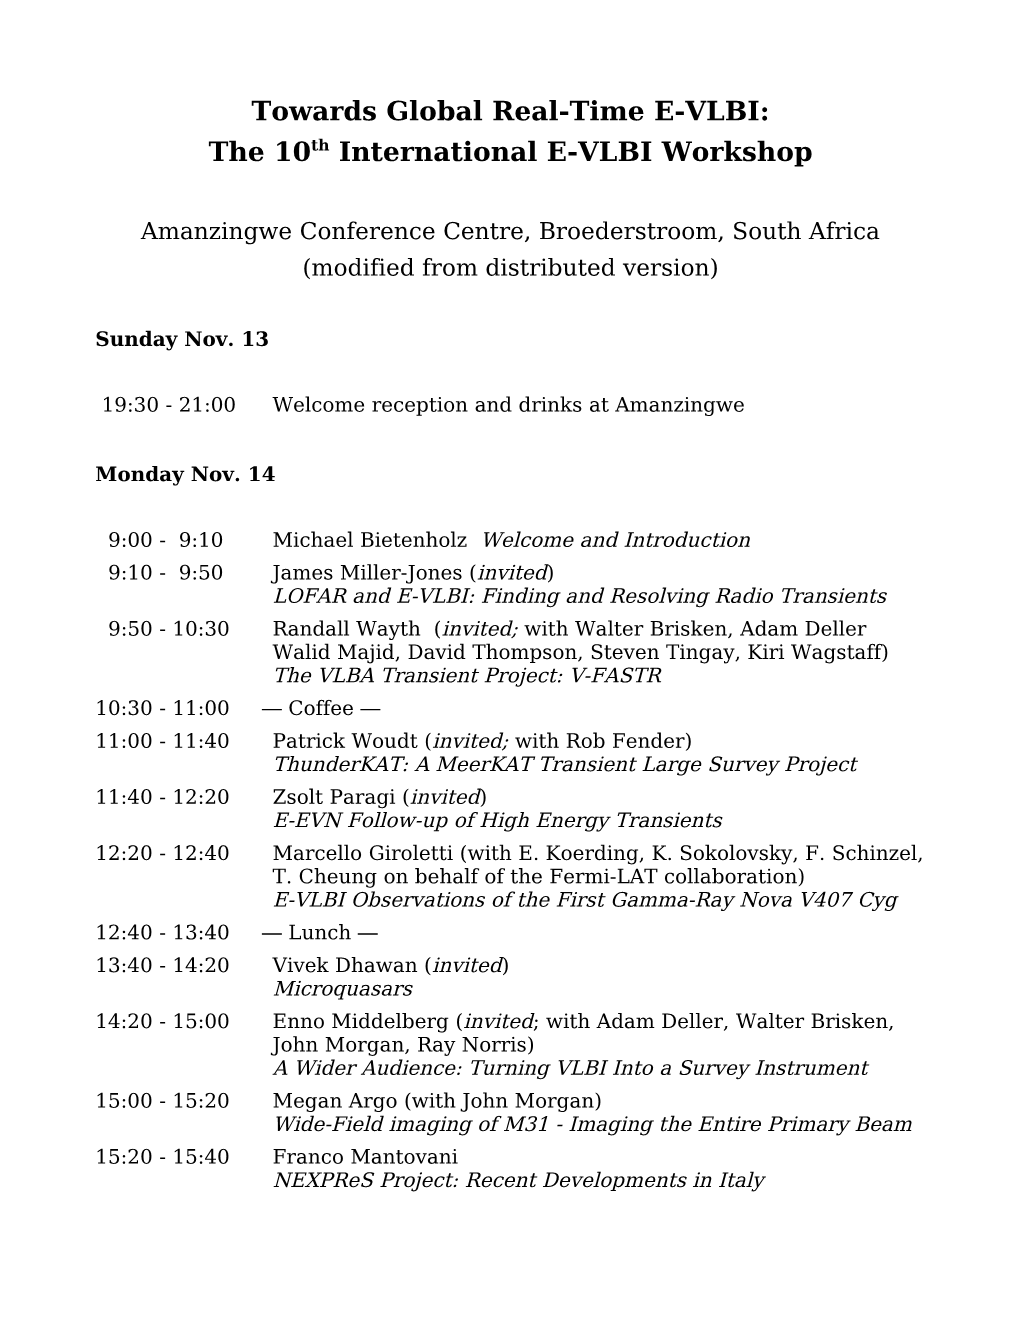 The 10Th International E-VLBI Workshop